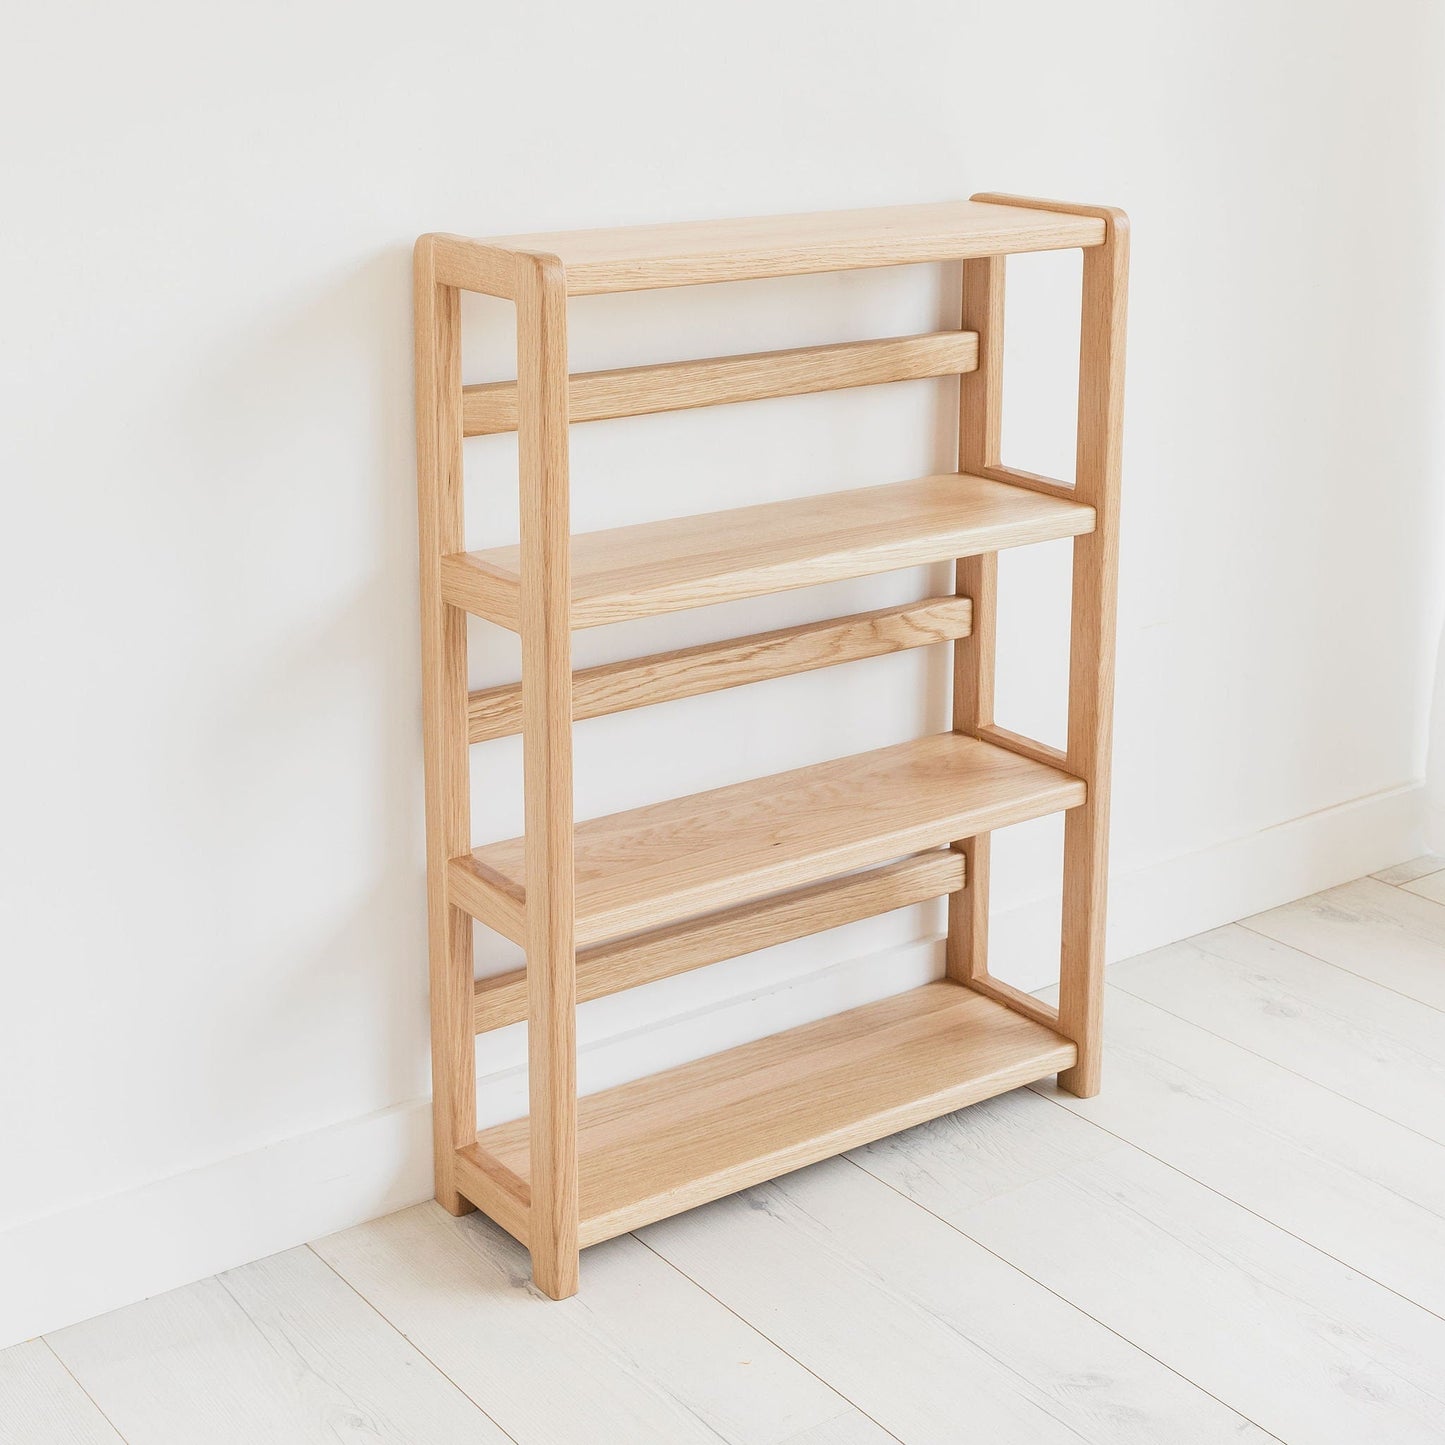 Solid Oak Shelving Unit || CP003 || Solid Hardwood Light Dark Kitchen Bookshelf Bookcase || Bristol Based Workshop - Bespoke Custom Orders